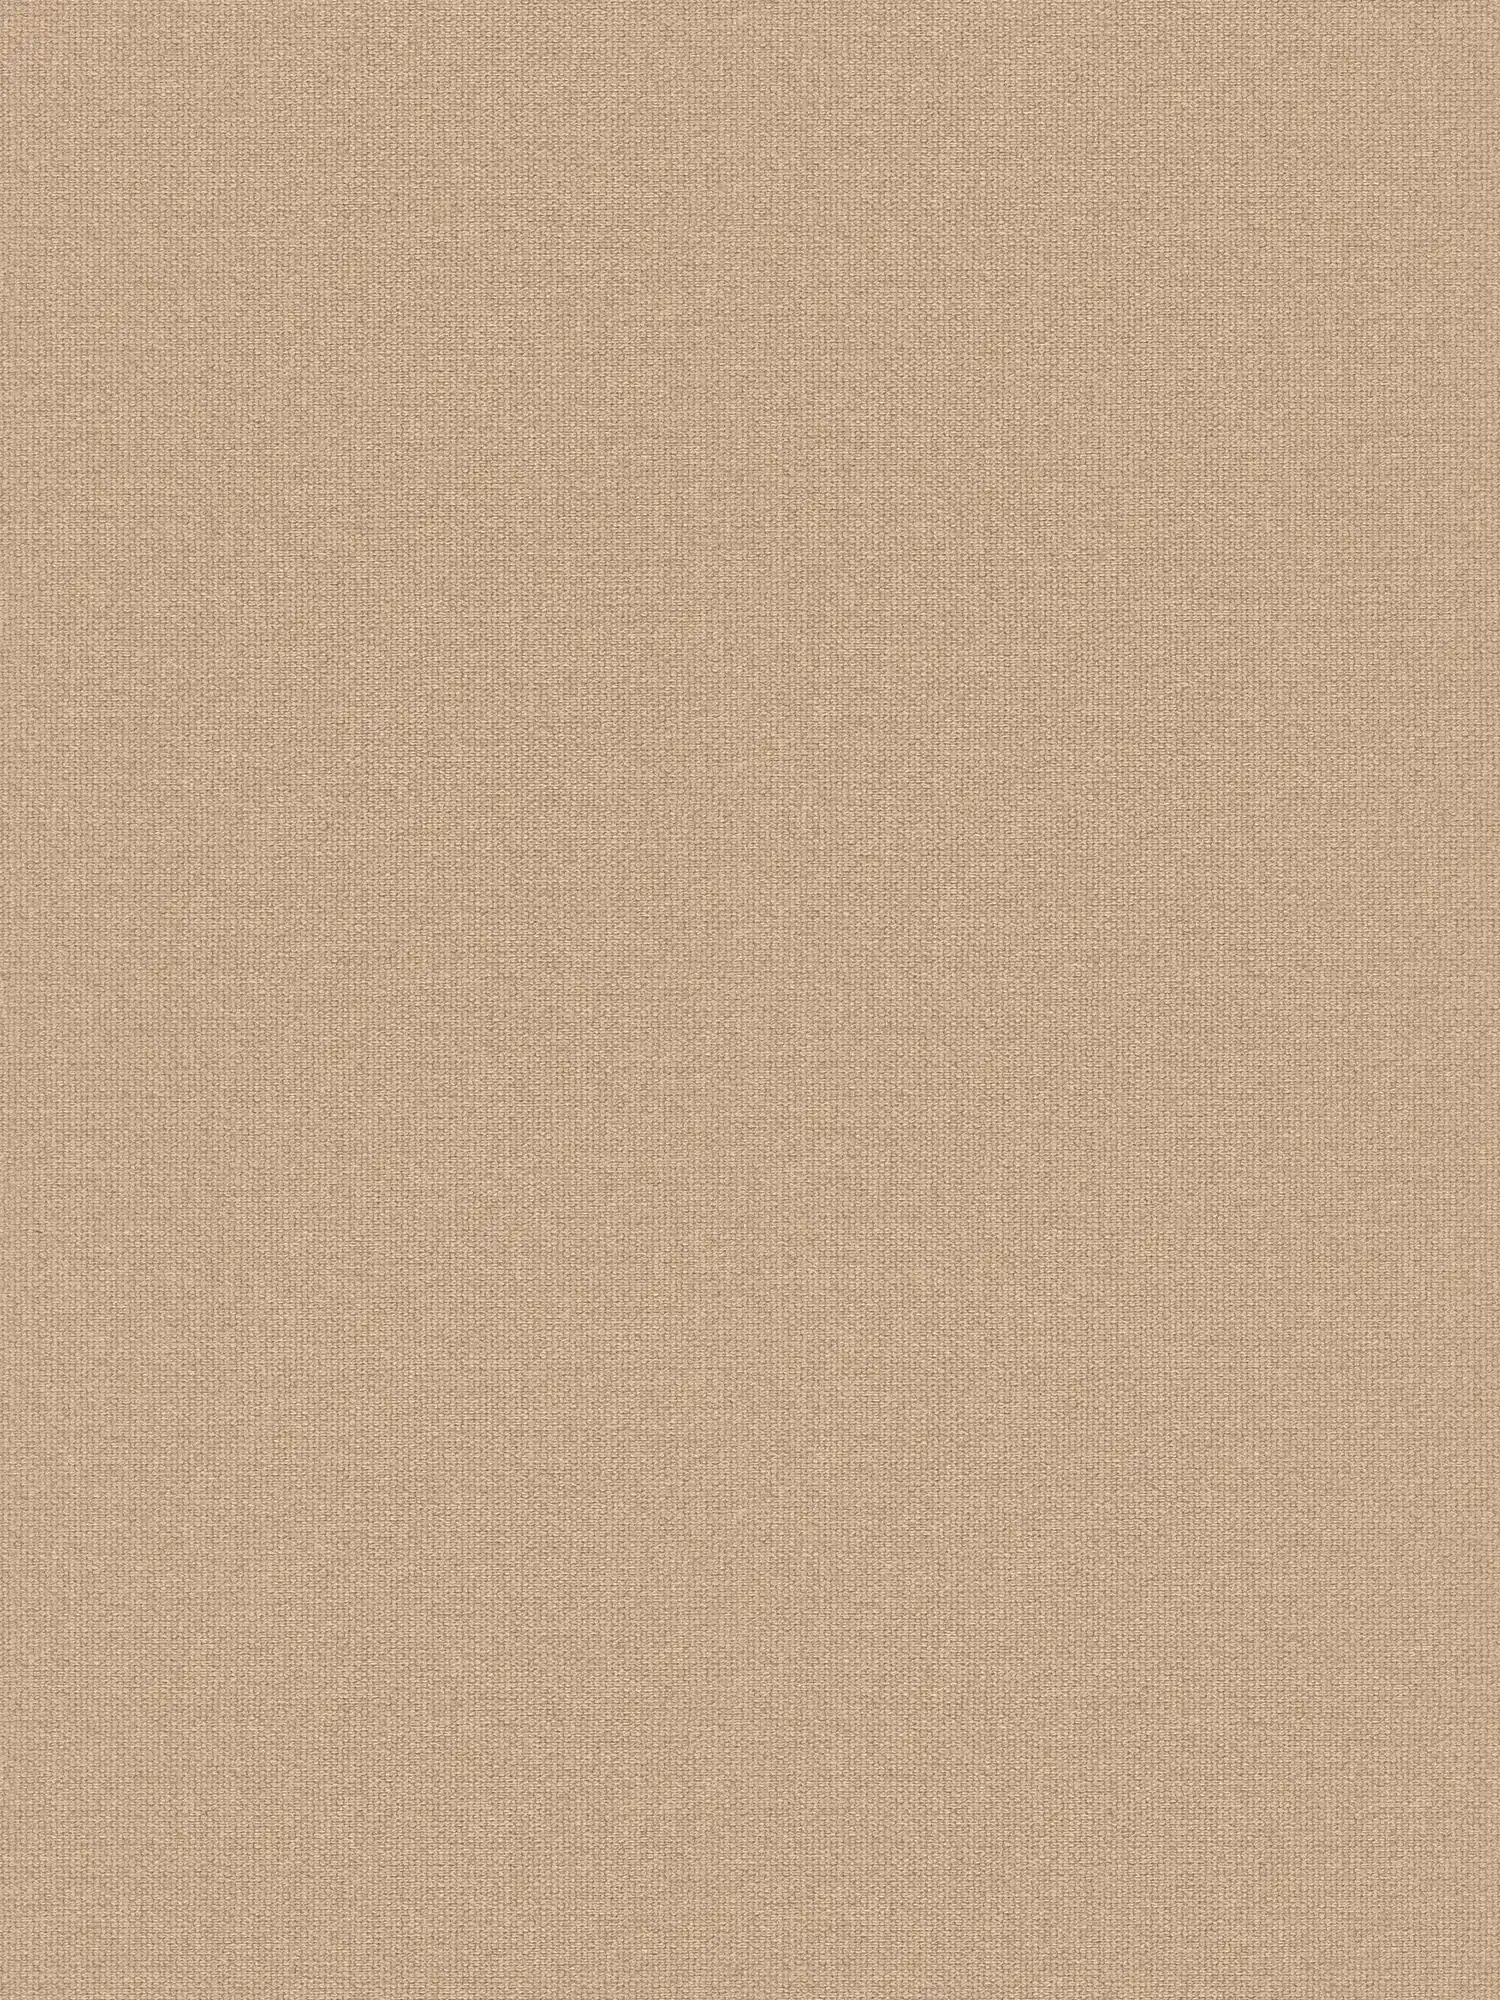 Textile optics wallpaper non-woven with texture effect, monochrome - beige
